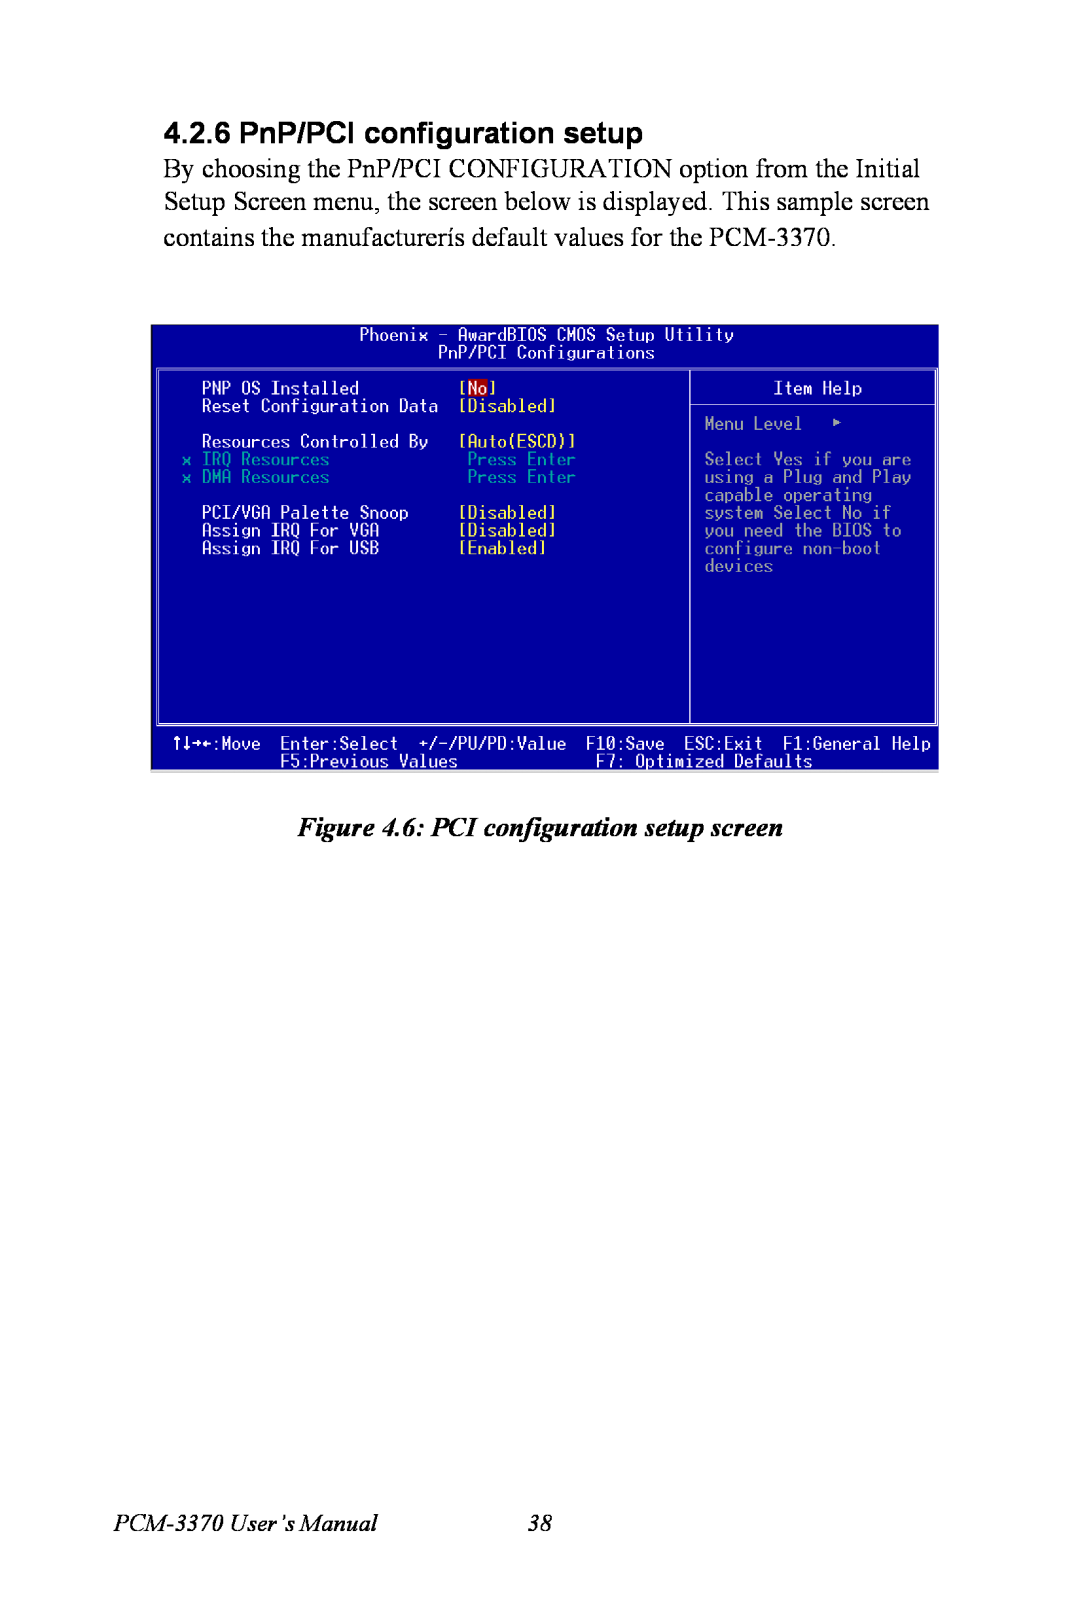 Intel user manual 4.2.6 PnP/PCI configuration setup, 6 PCI configuration setup screen, PCM-3370 User’s Manual 